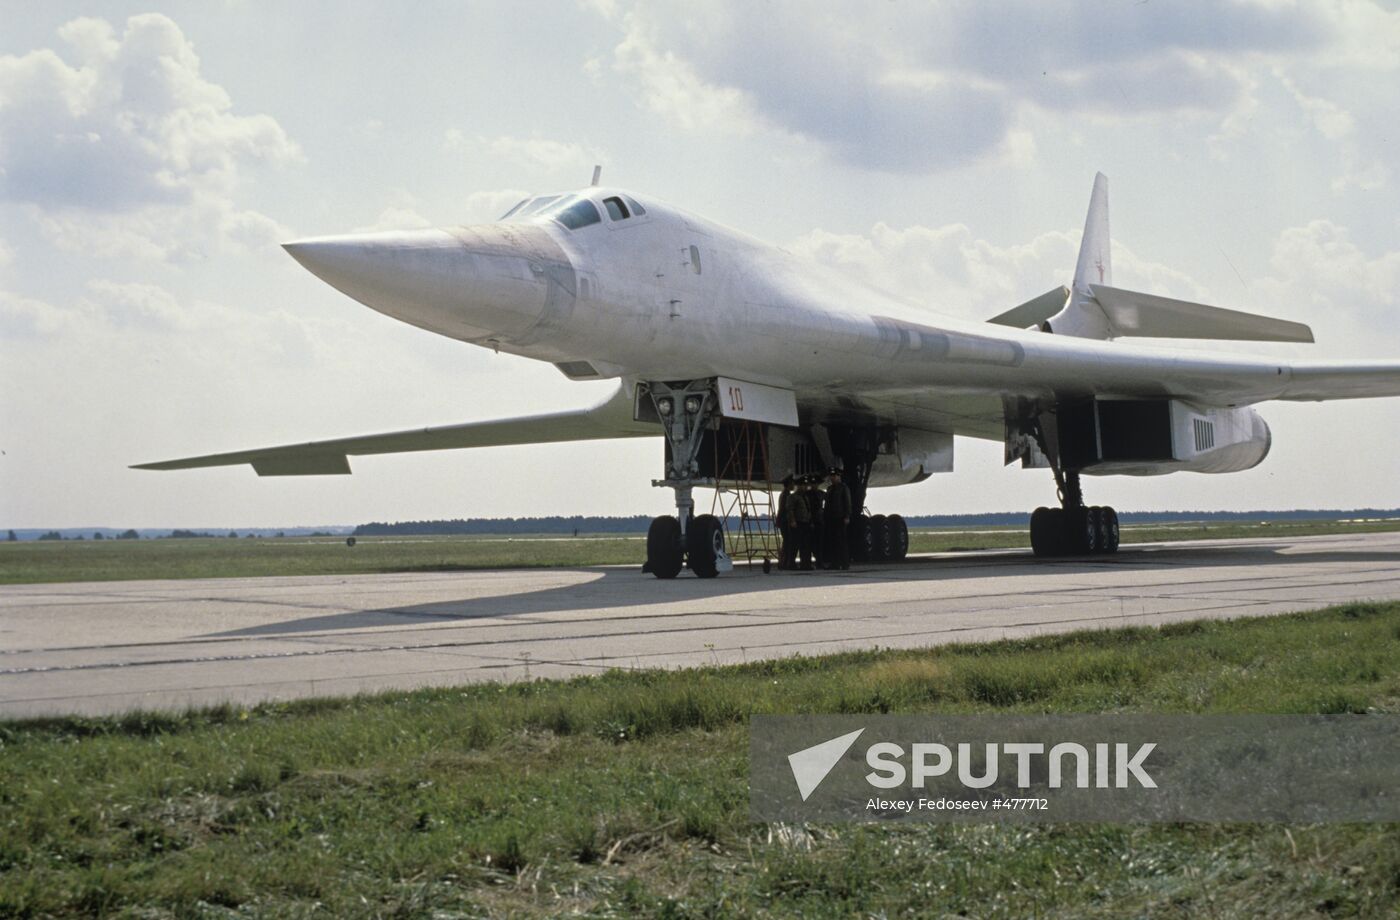 A Tupolev Tu-160 Blackjack strategic bomber